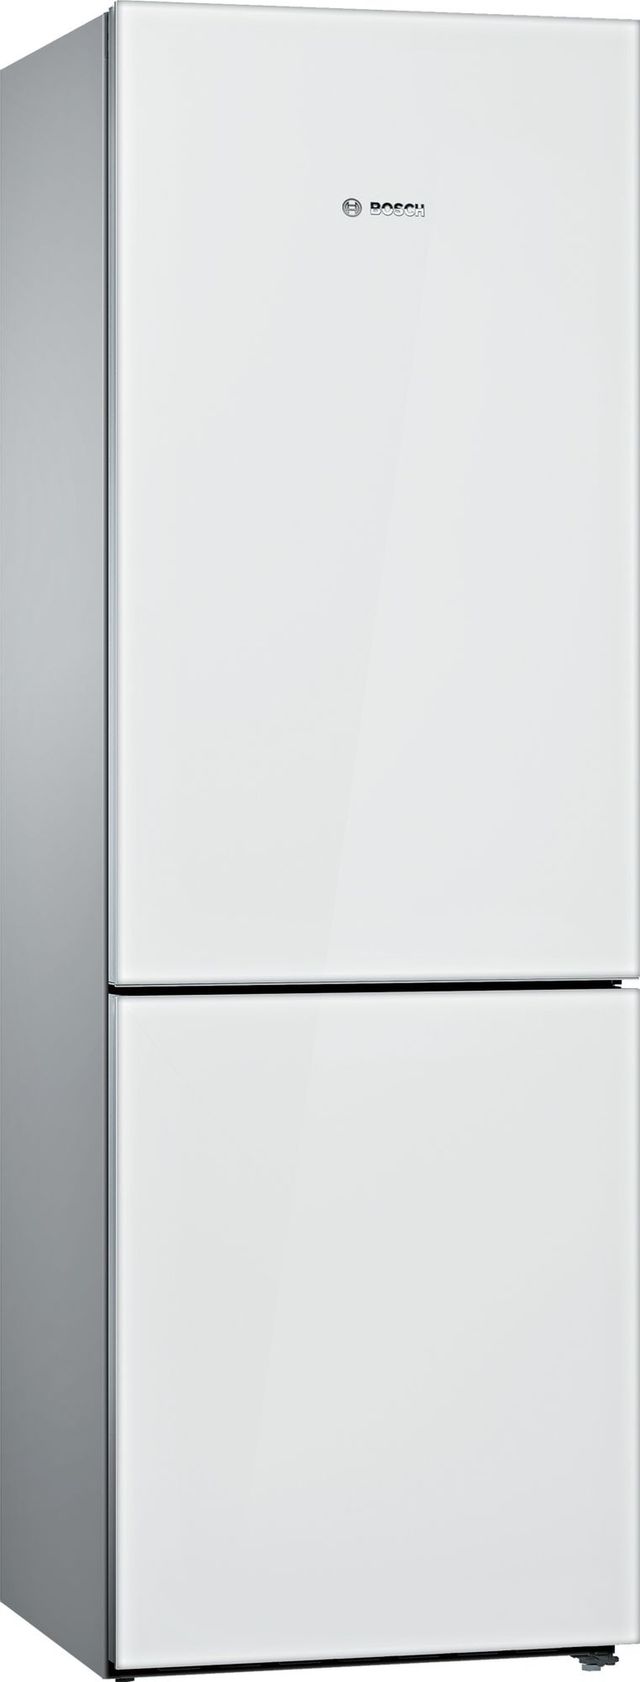 Bosch® 800 Series 10.0 Cu. Ft. White Counter Depth Bottom Freezer Refrigerator-0